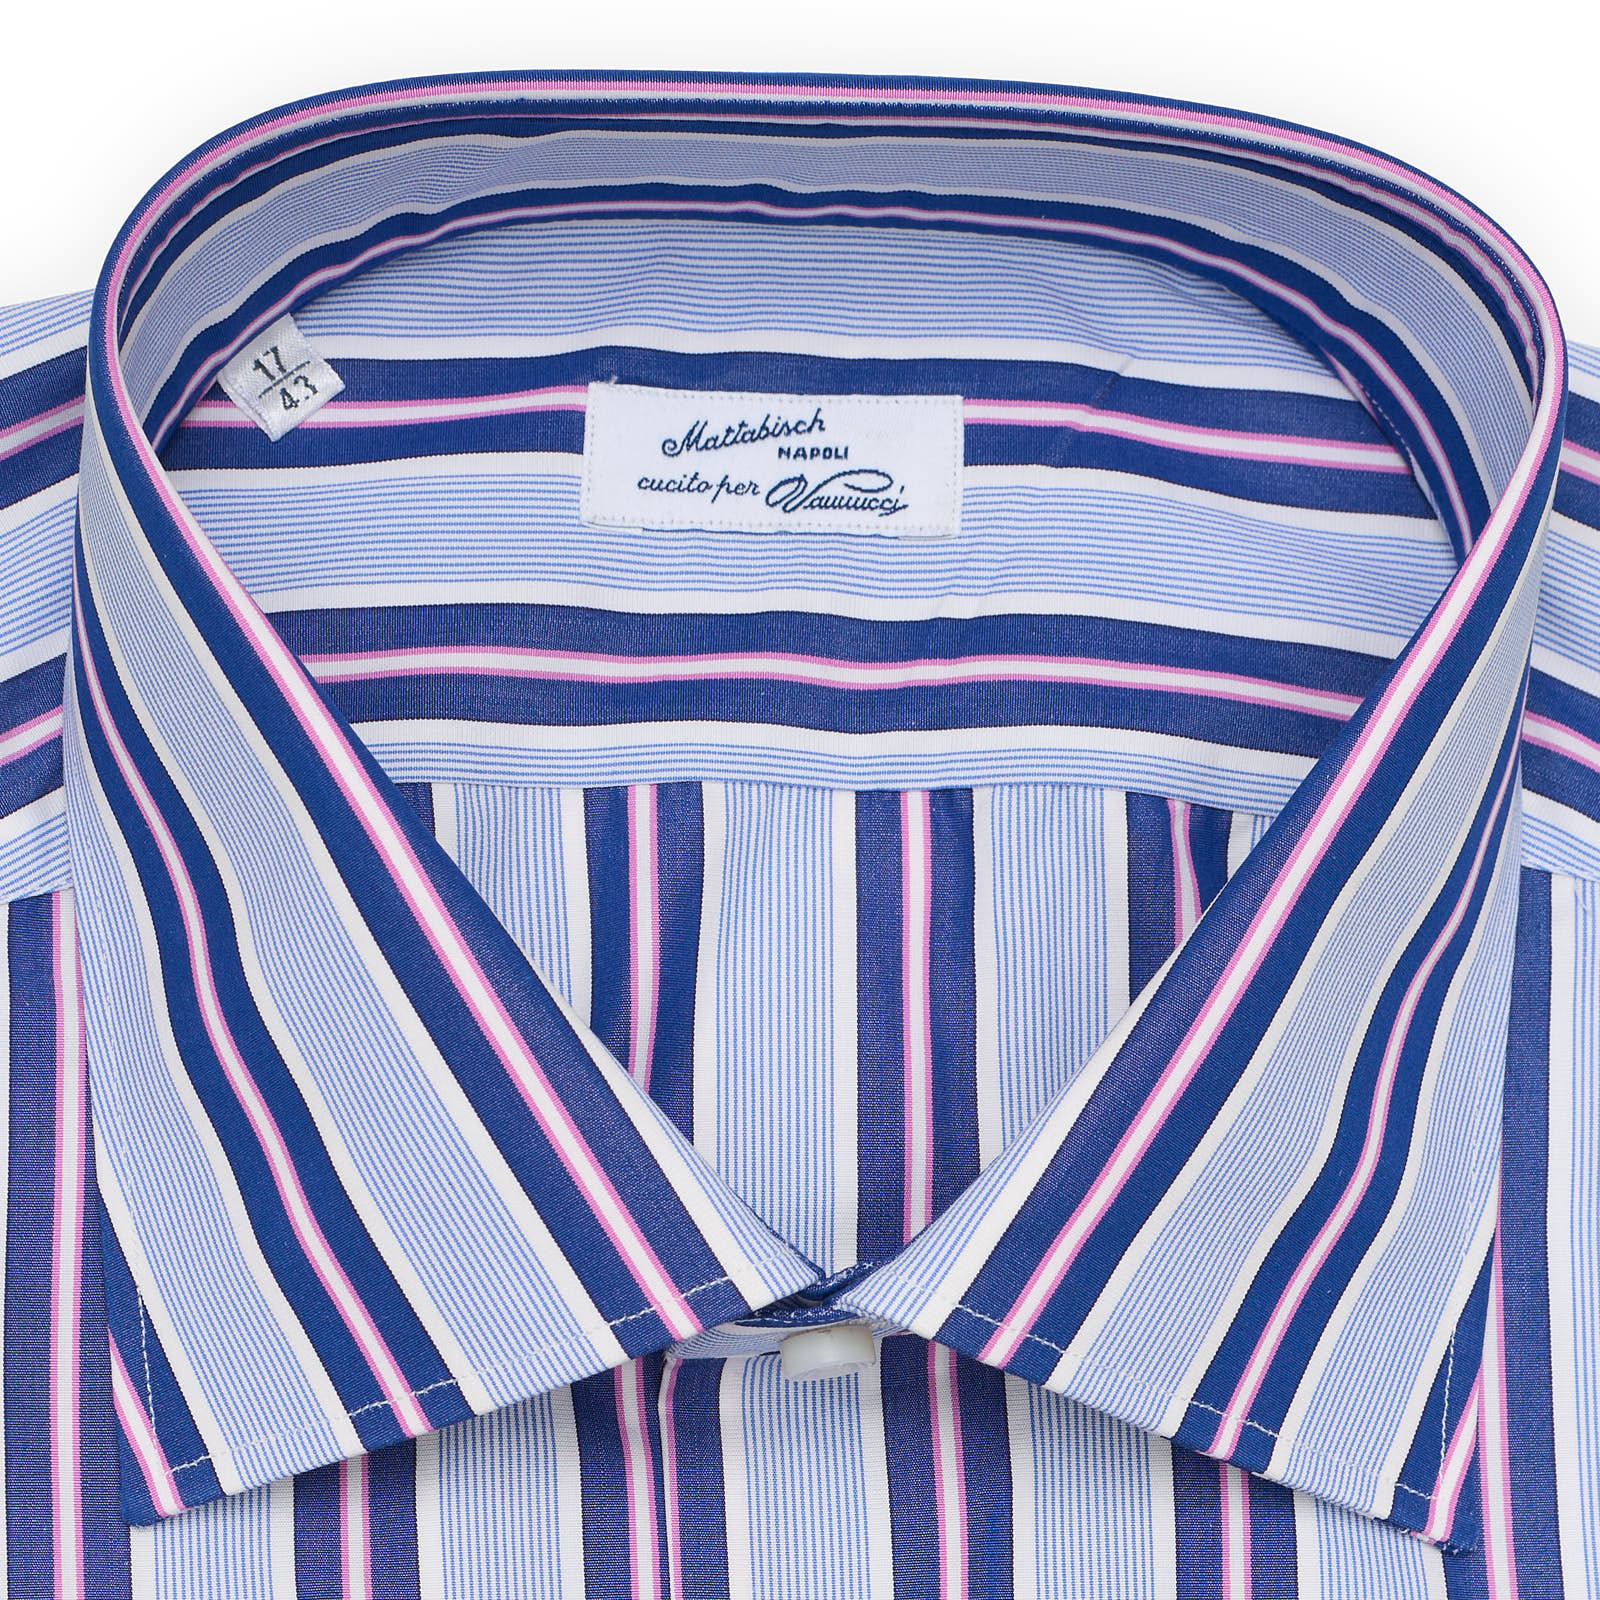 MATTABISCH for VANNUCCI Blue Striped Cotton Dress Shirt